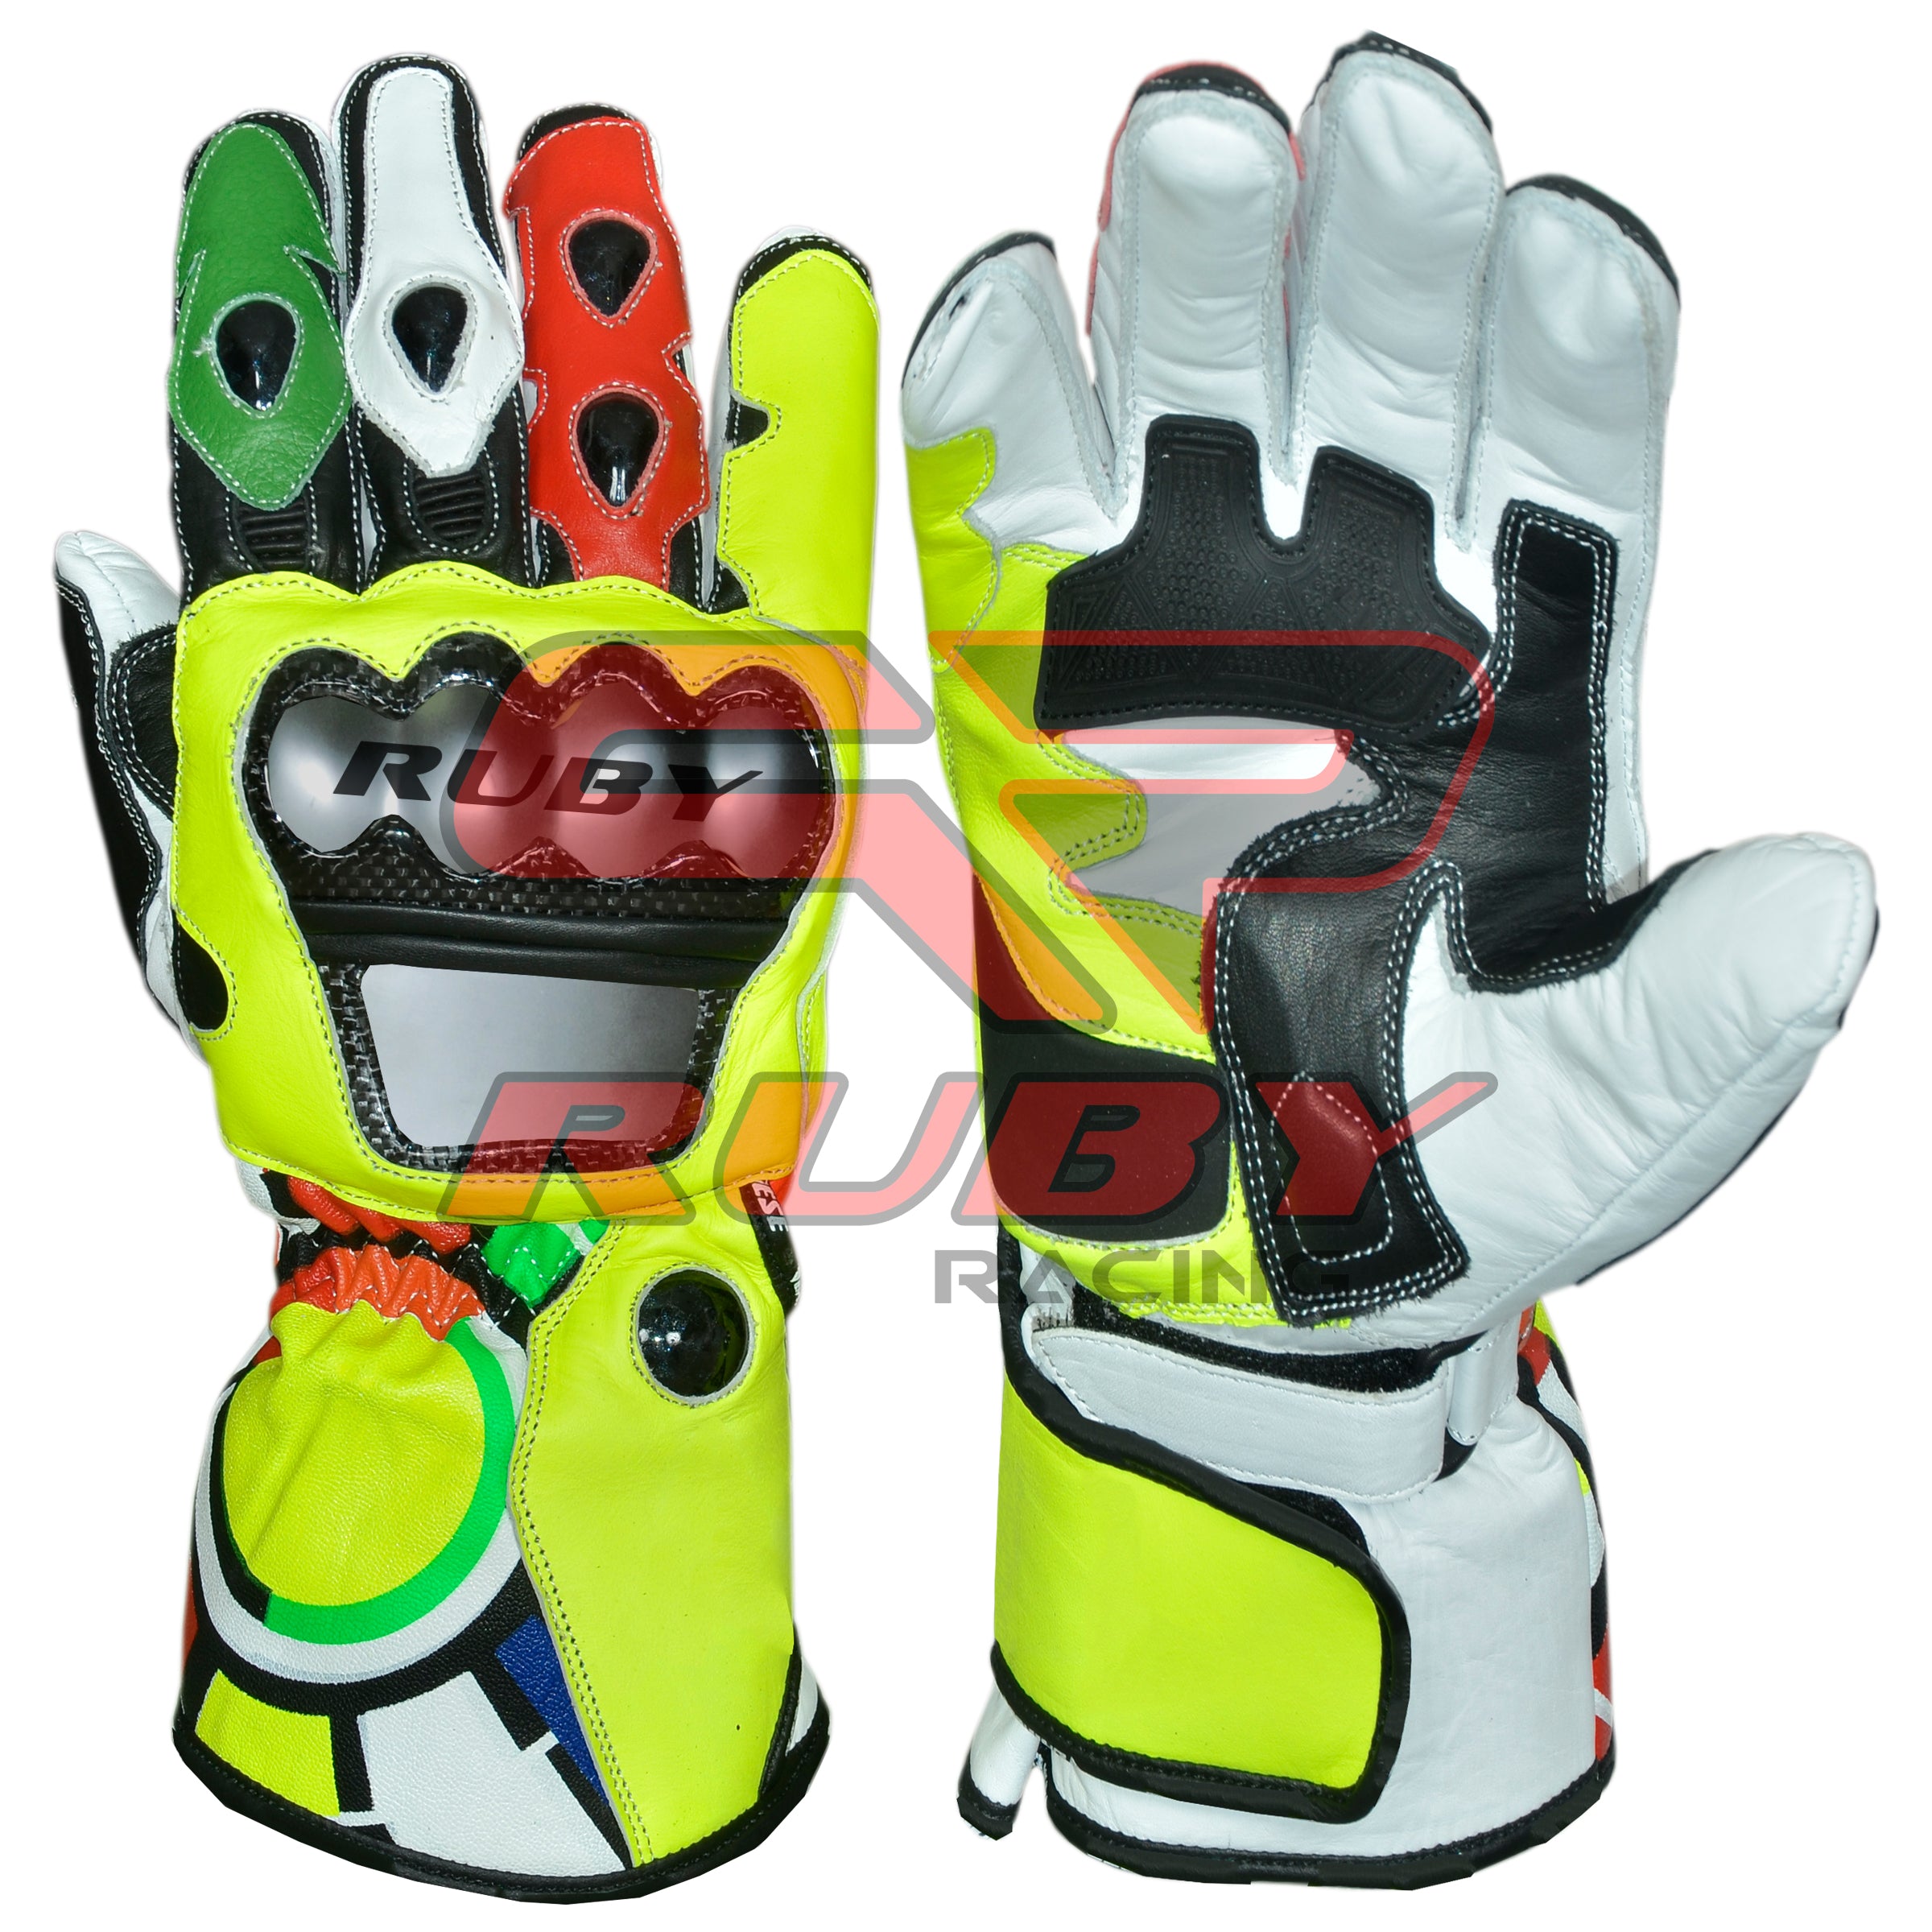 Rossi Mens Motorbike Gloves 1